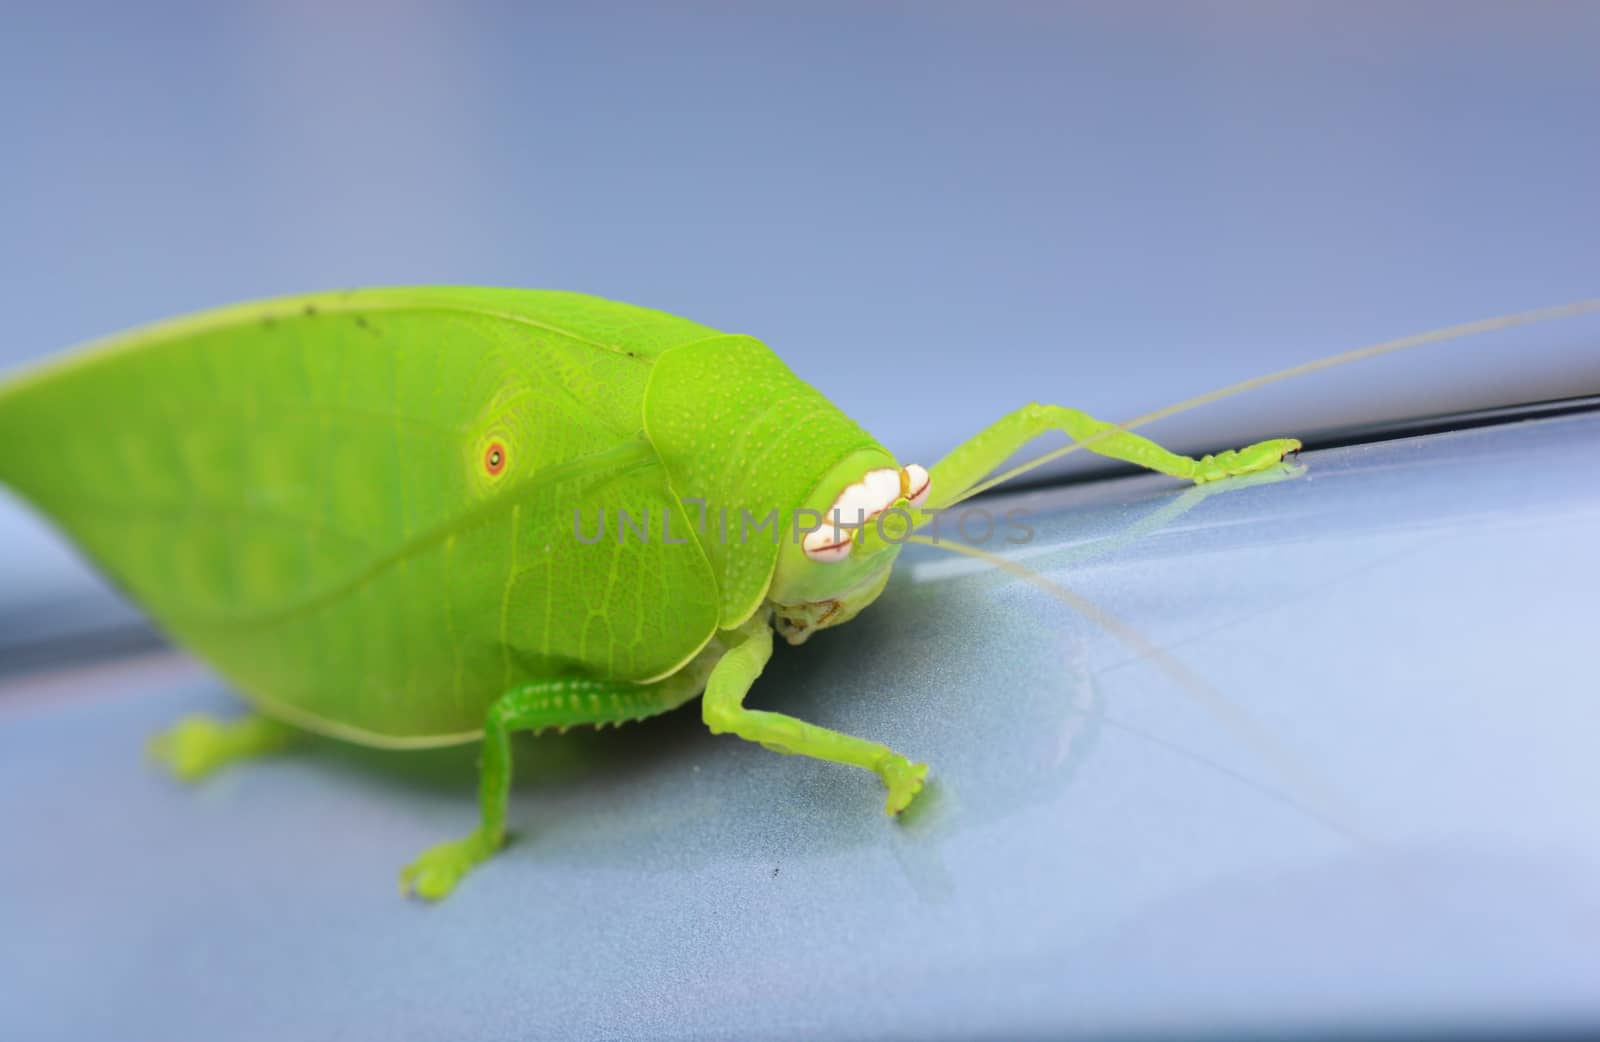 Pseudophyllus titans or giant leaf katydid (giant leaf bug) by ideation90